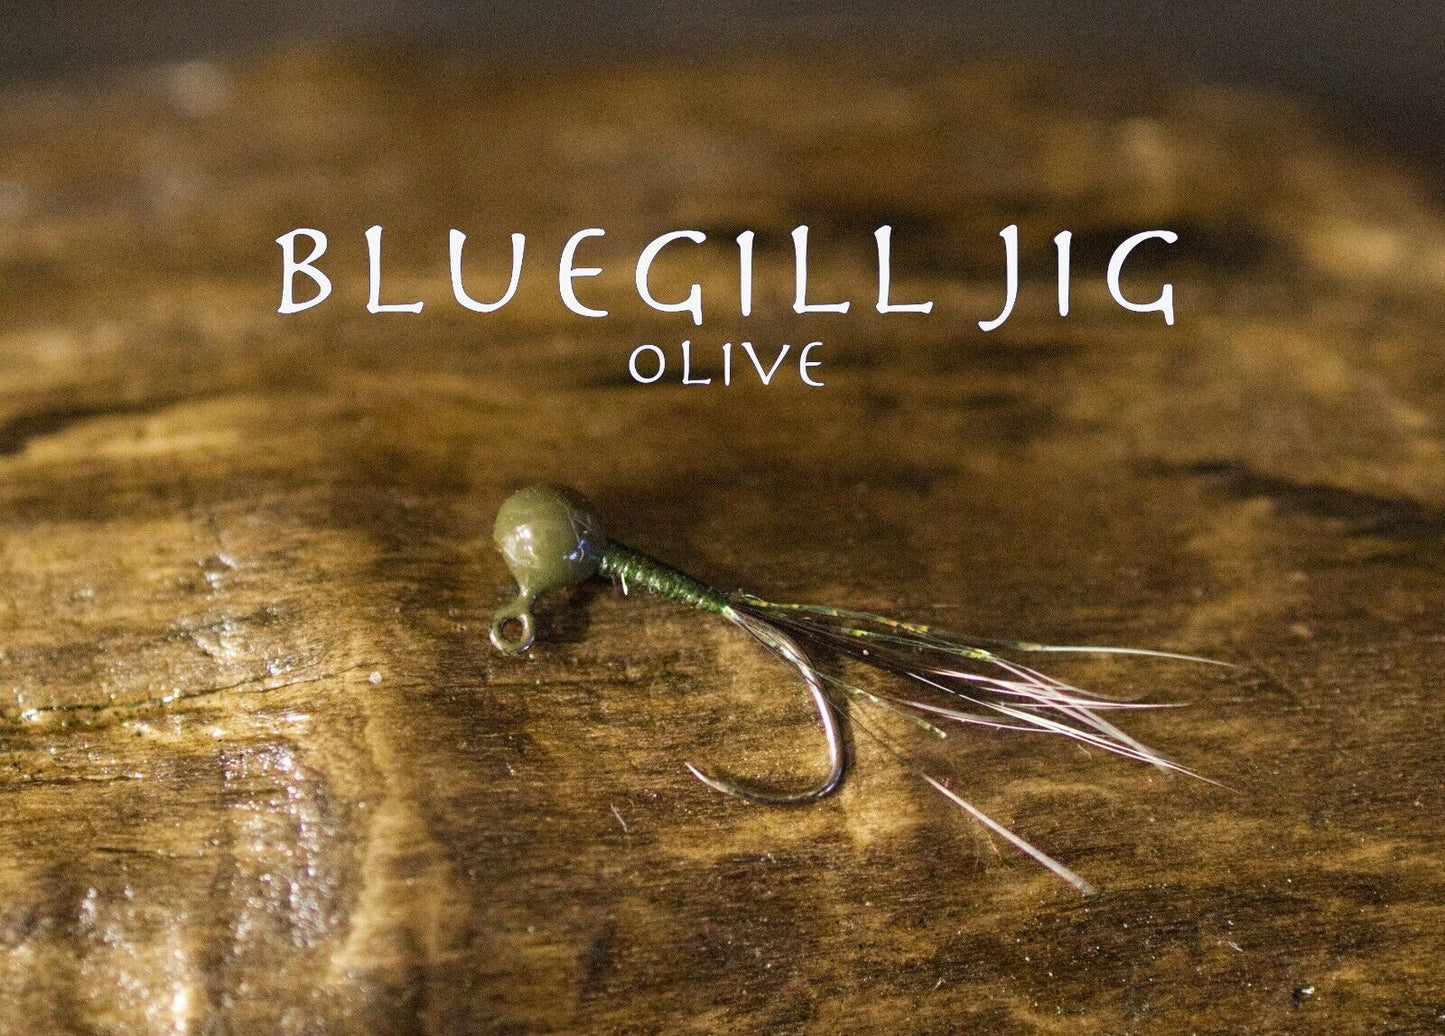 Bluegill Jig